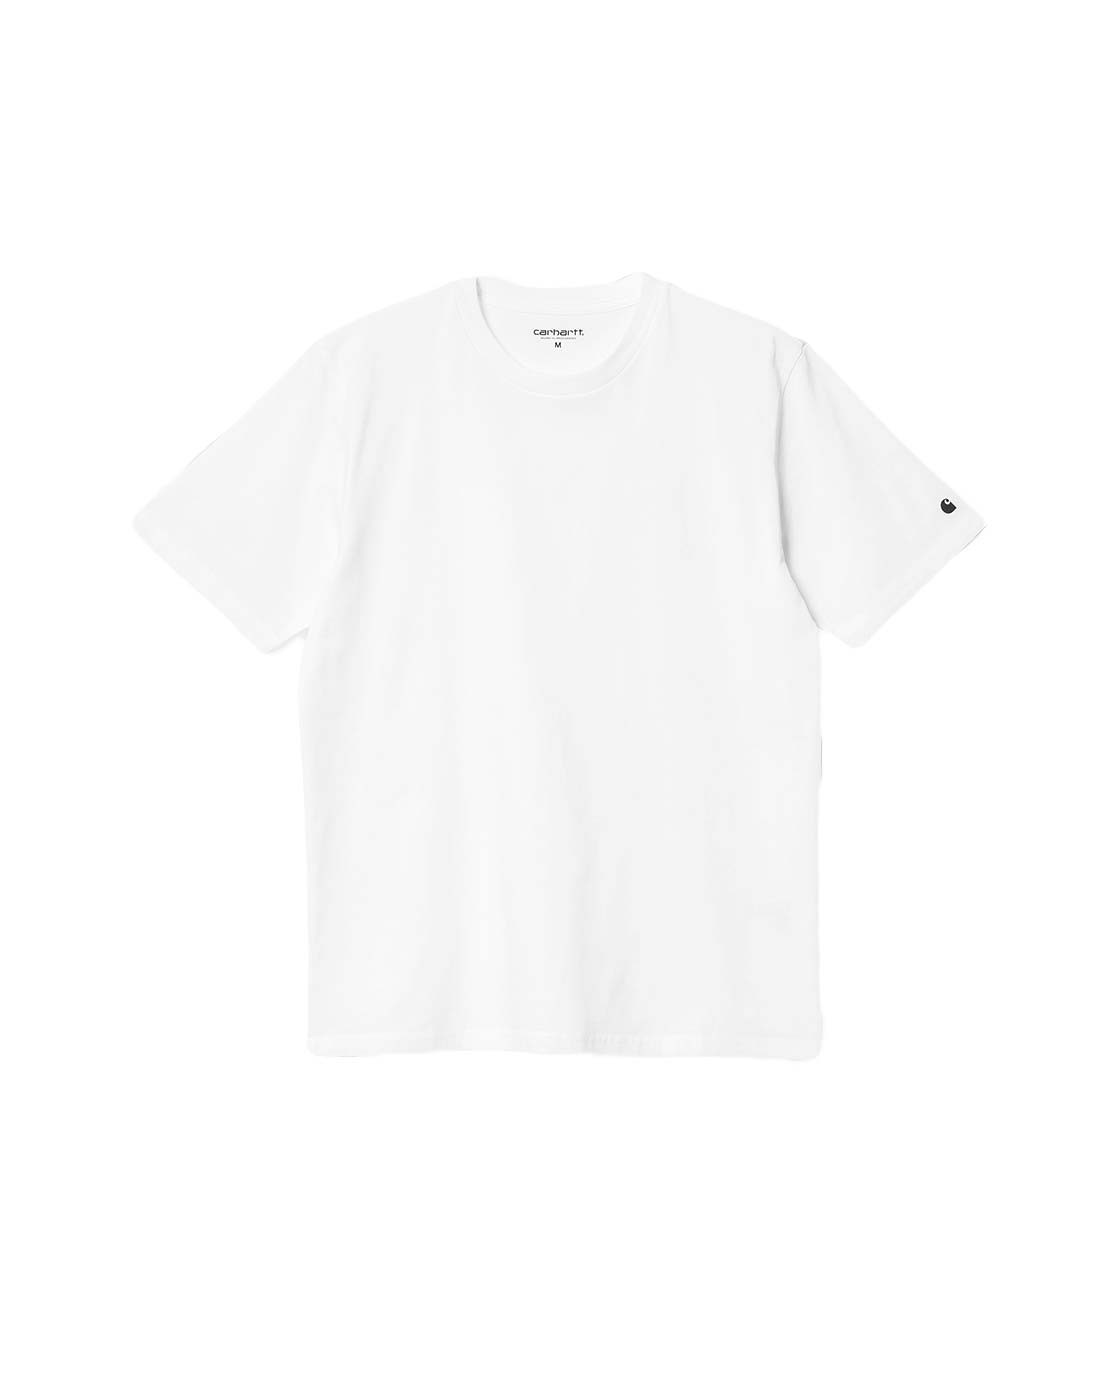 Ss base t-shirt white black